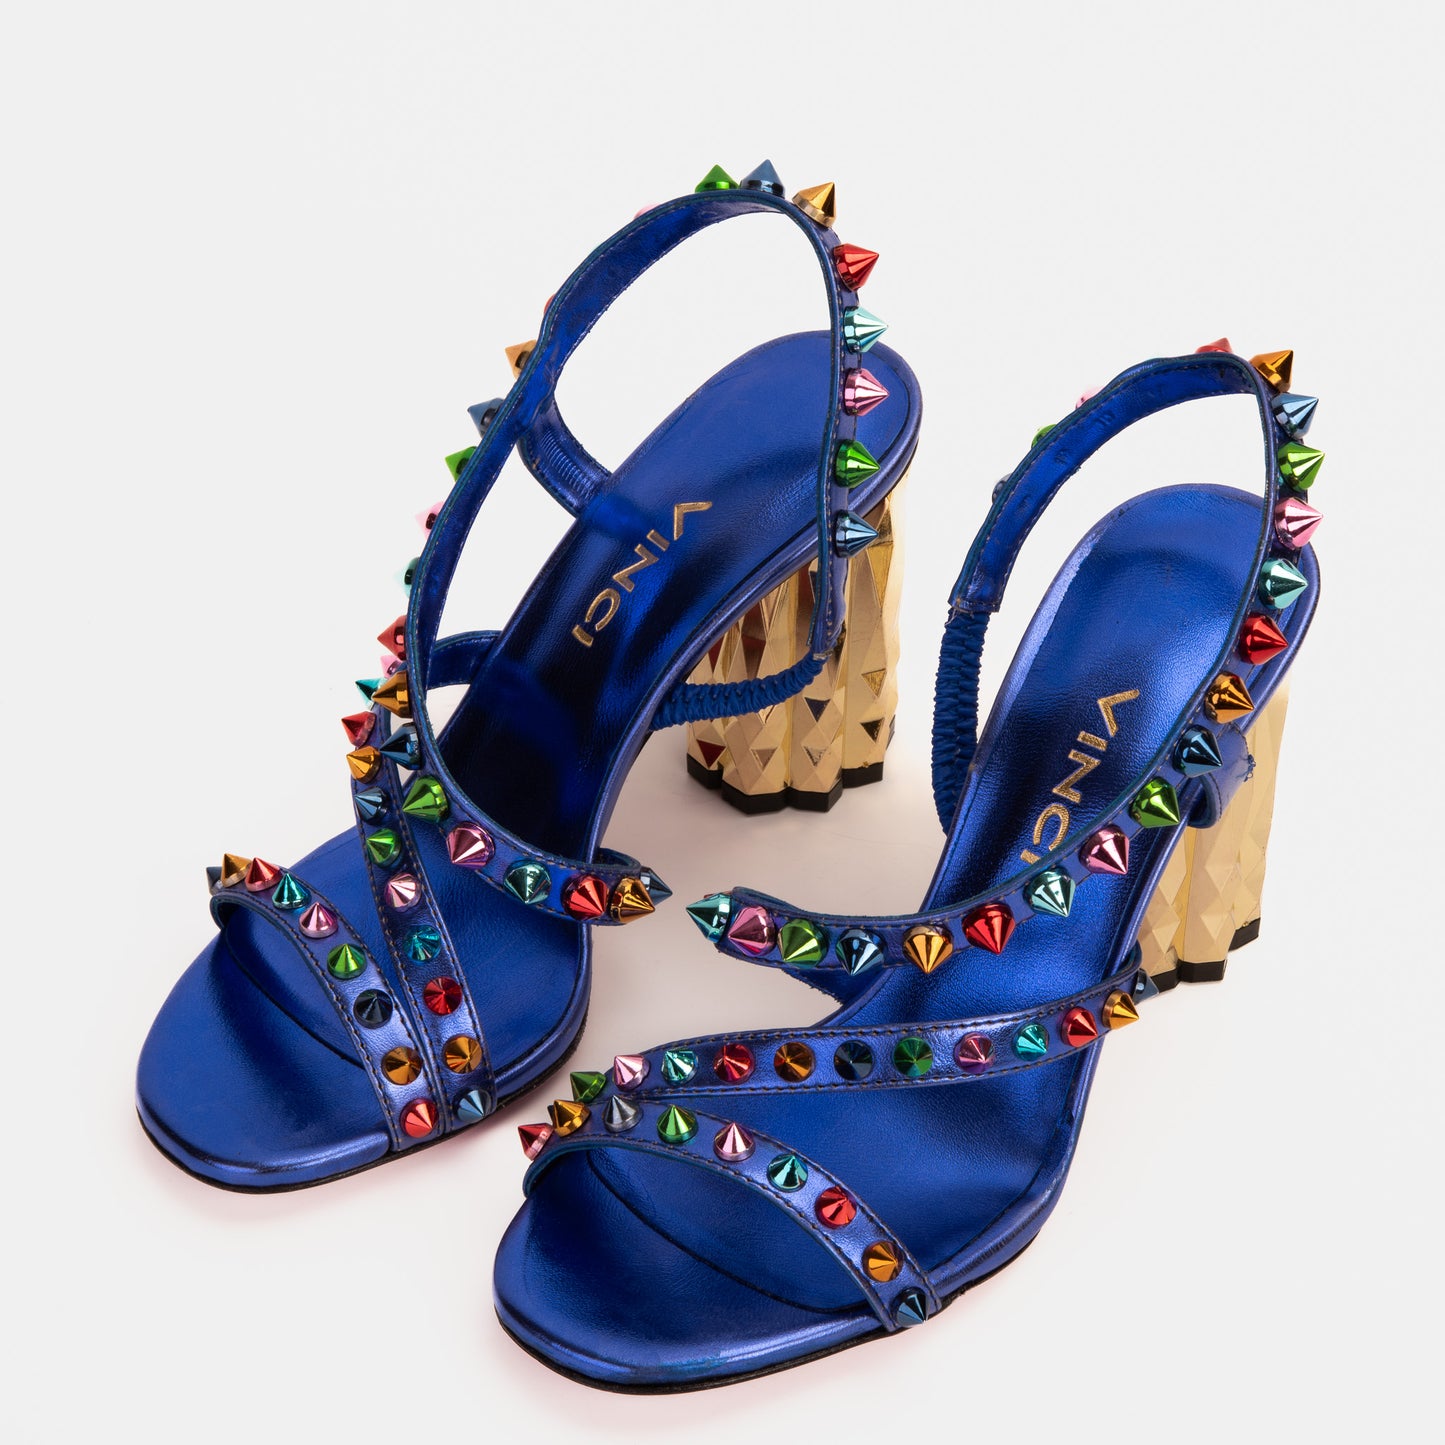 The Caris Sax Blue Block Heel Spike Leather Women Sandal